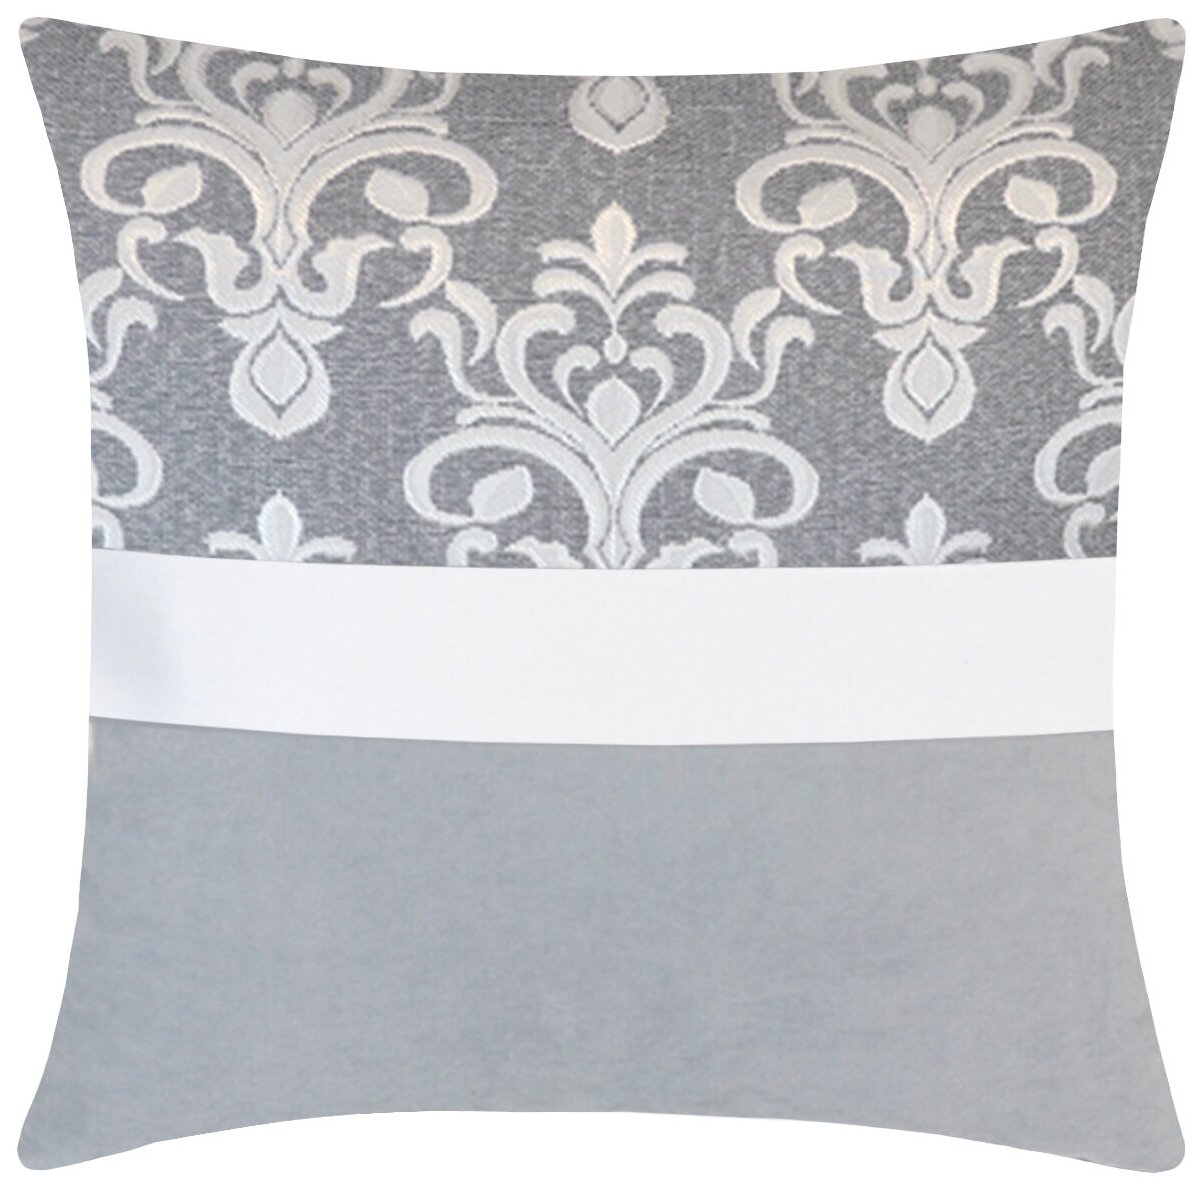 Наволочка - чехол для декоративной подушки на молнии Мариз, 45 х 45 см, серый, белый